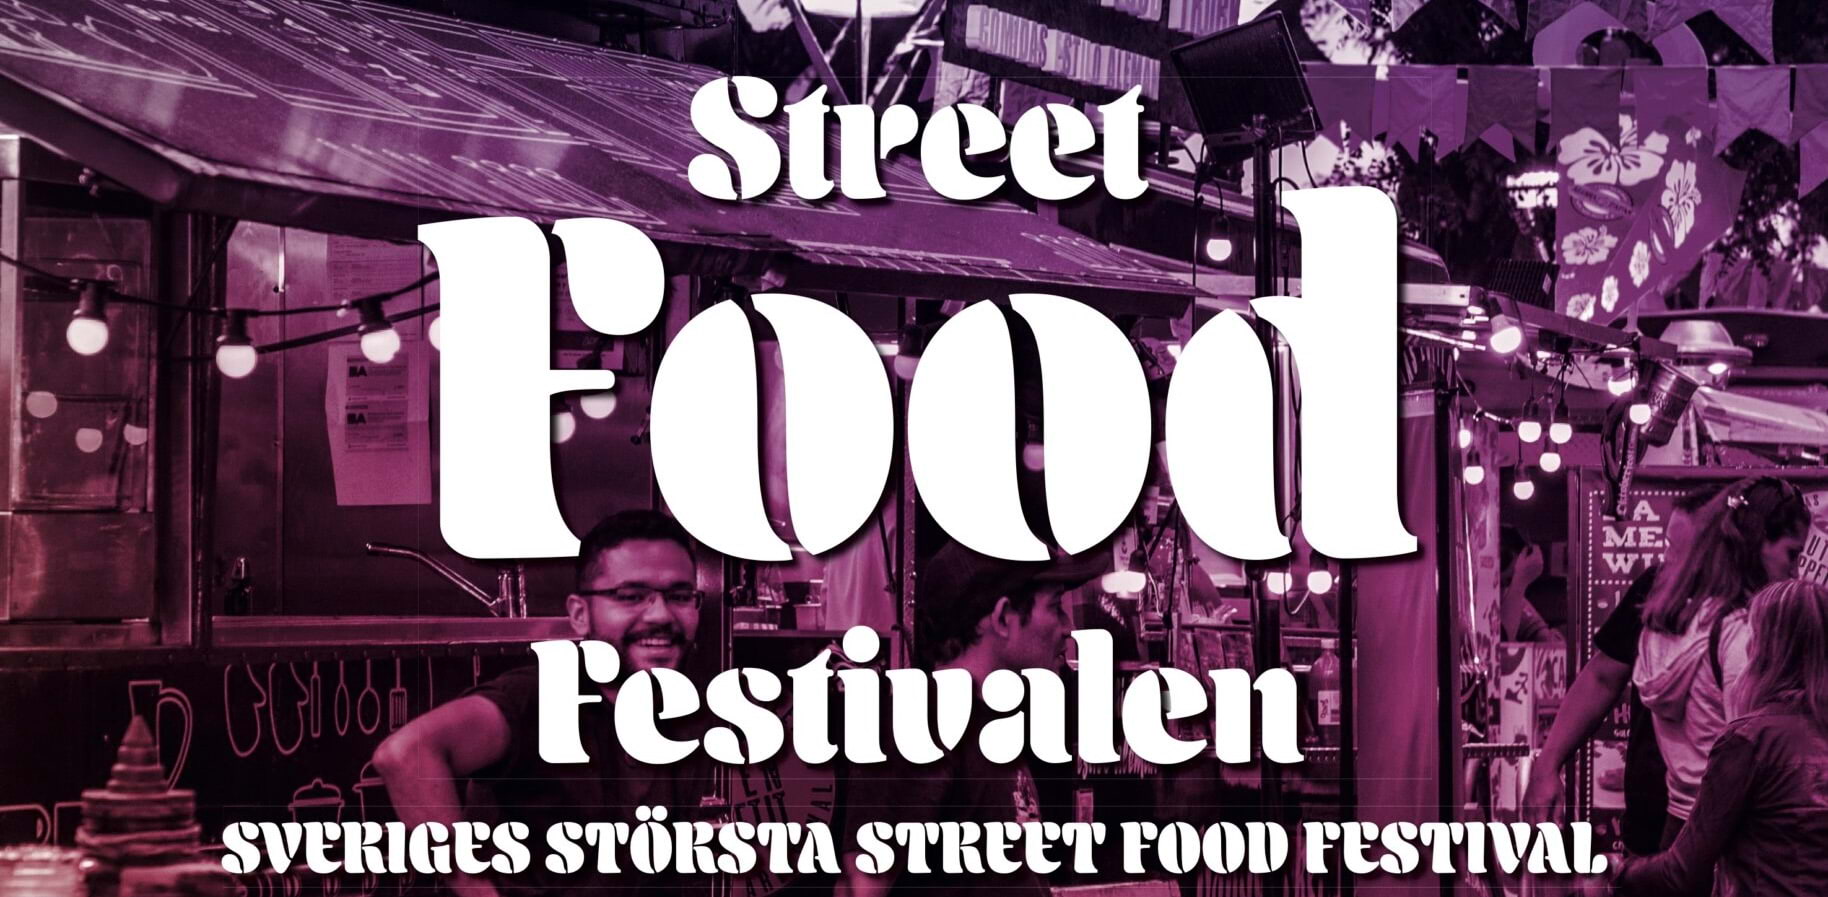 Streetfoodfestivalen intar åter igen Stockholm. Foto: Pressbild